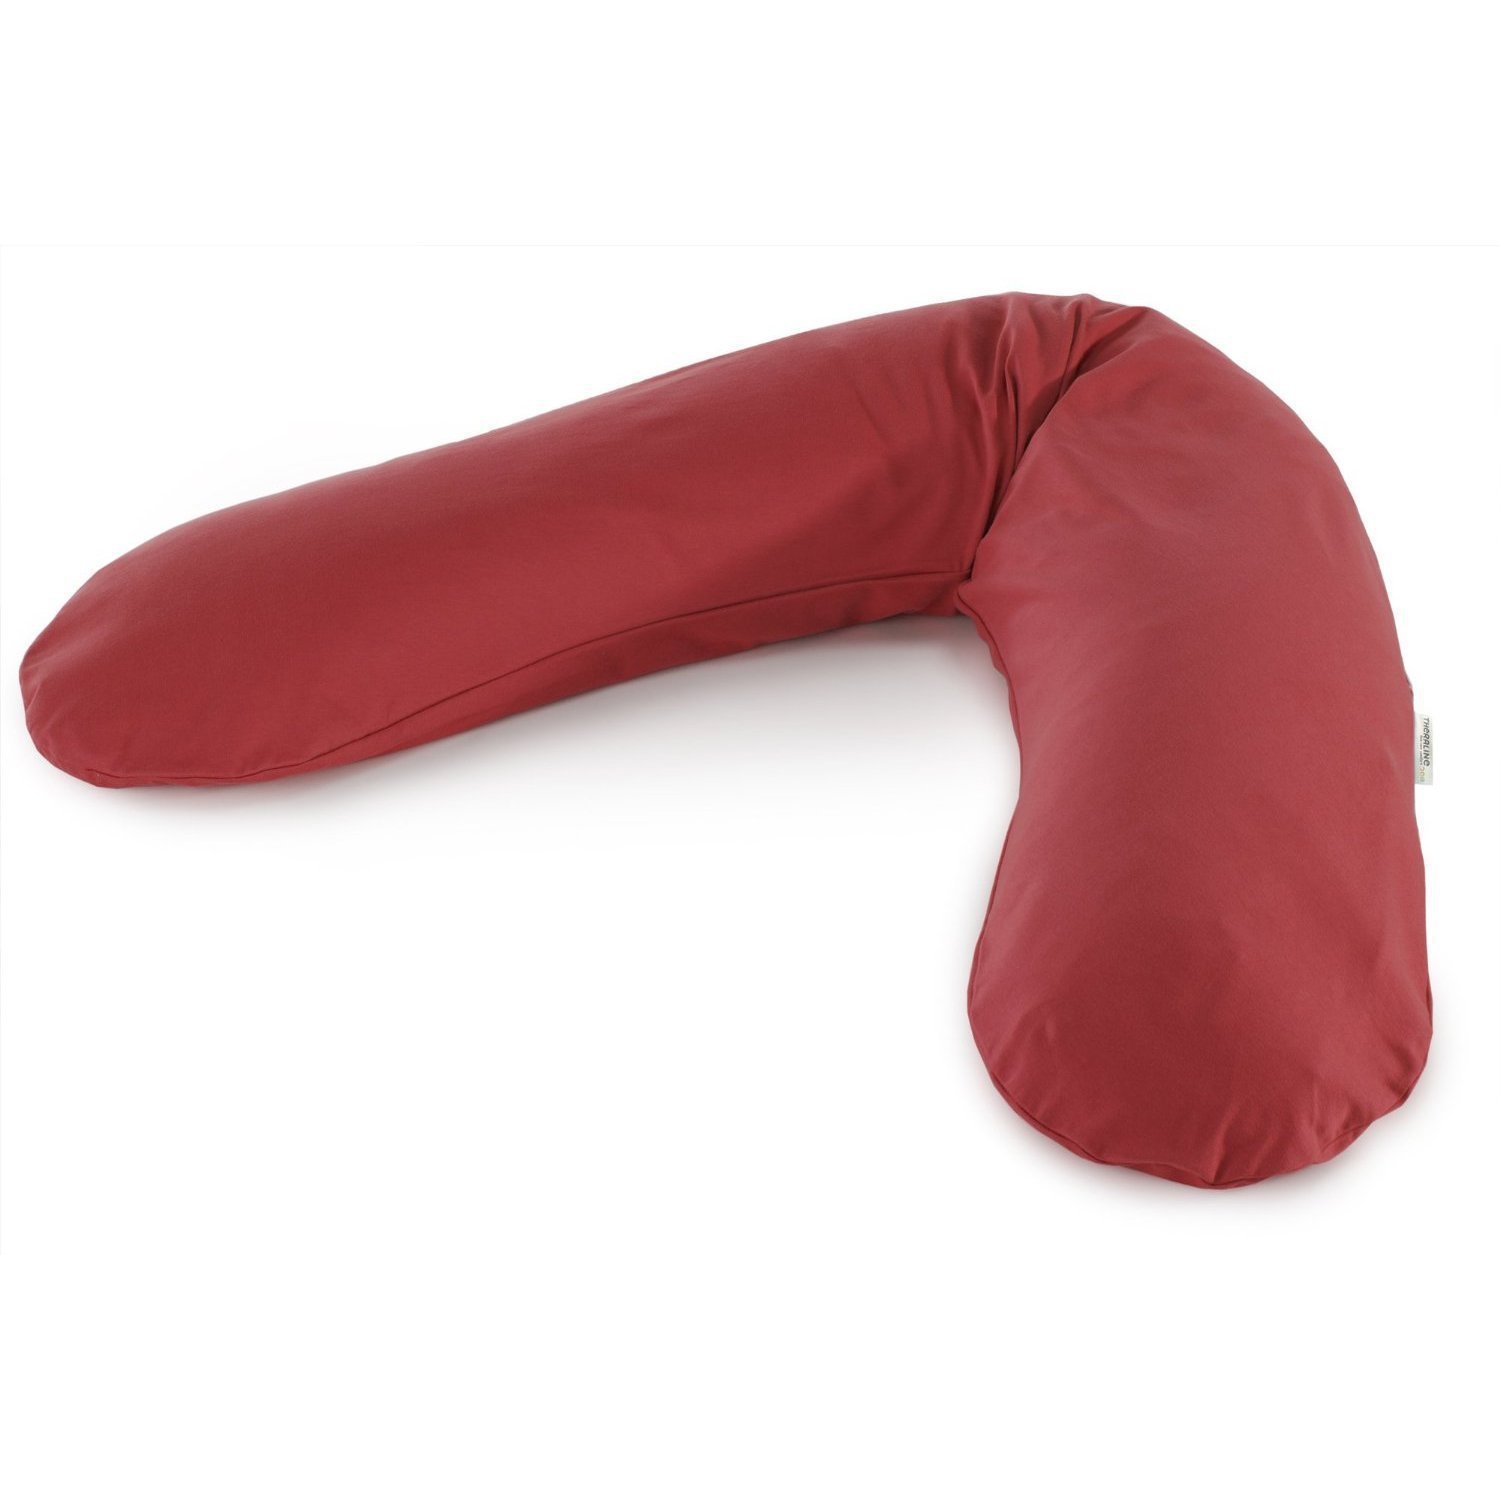 Theraline Nursing pillow Original Jersey red